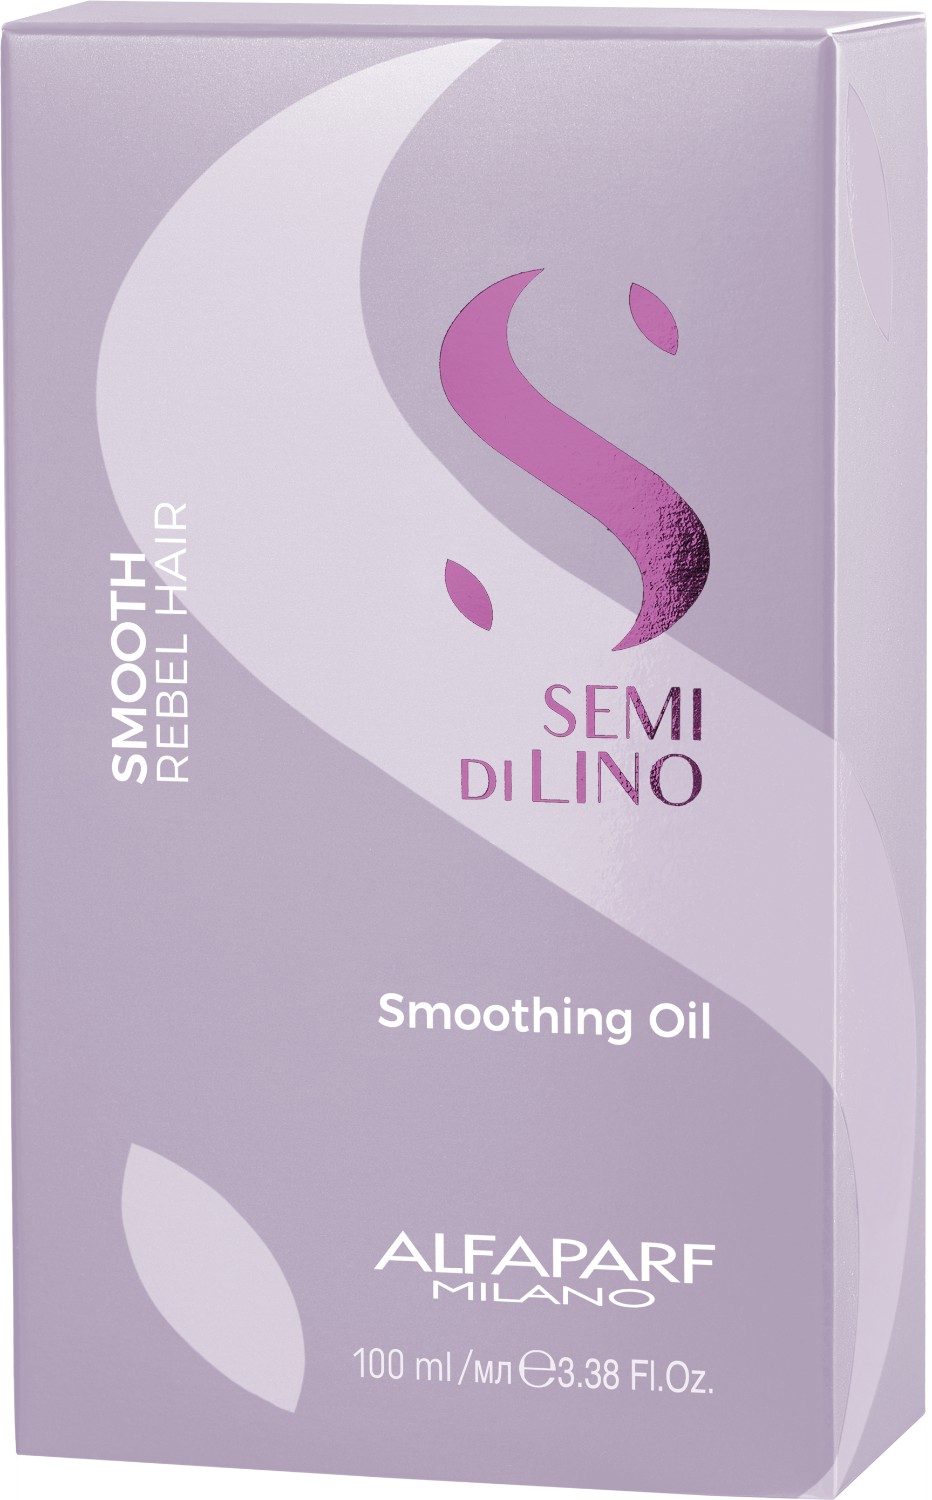  Alfaparf Milano Semi di Lino Smooth Smoothing Oil 100 ml 